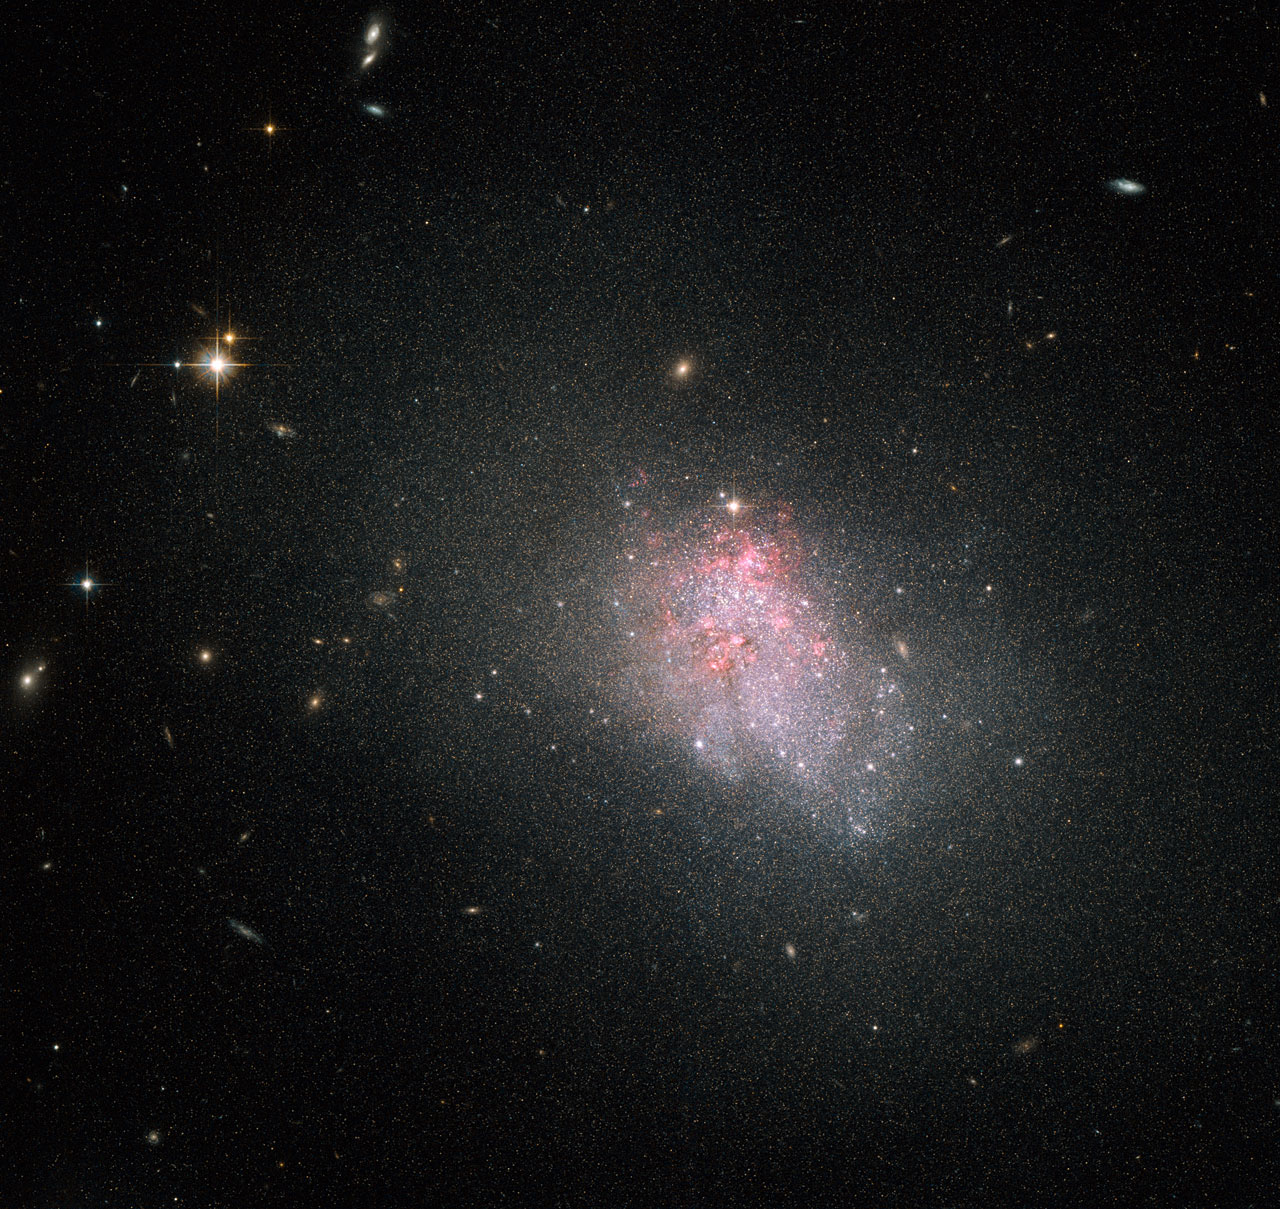 Hubble Views a Starburst Galaxy Hard at Work1280 x 1209